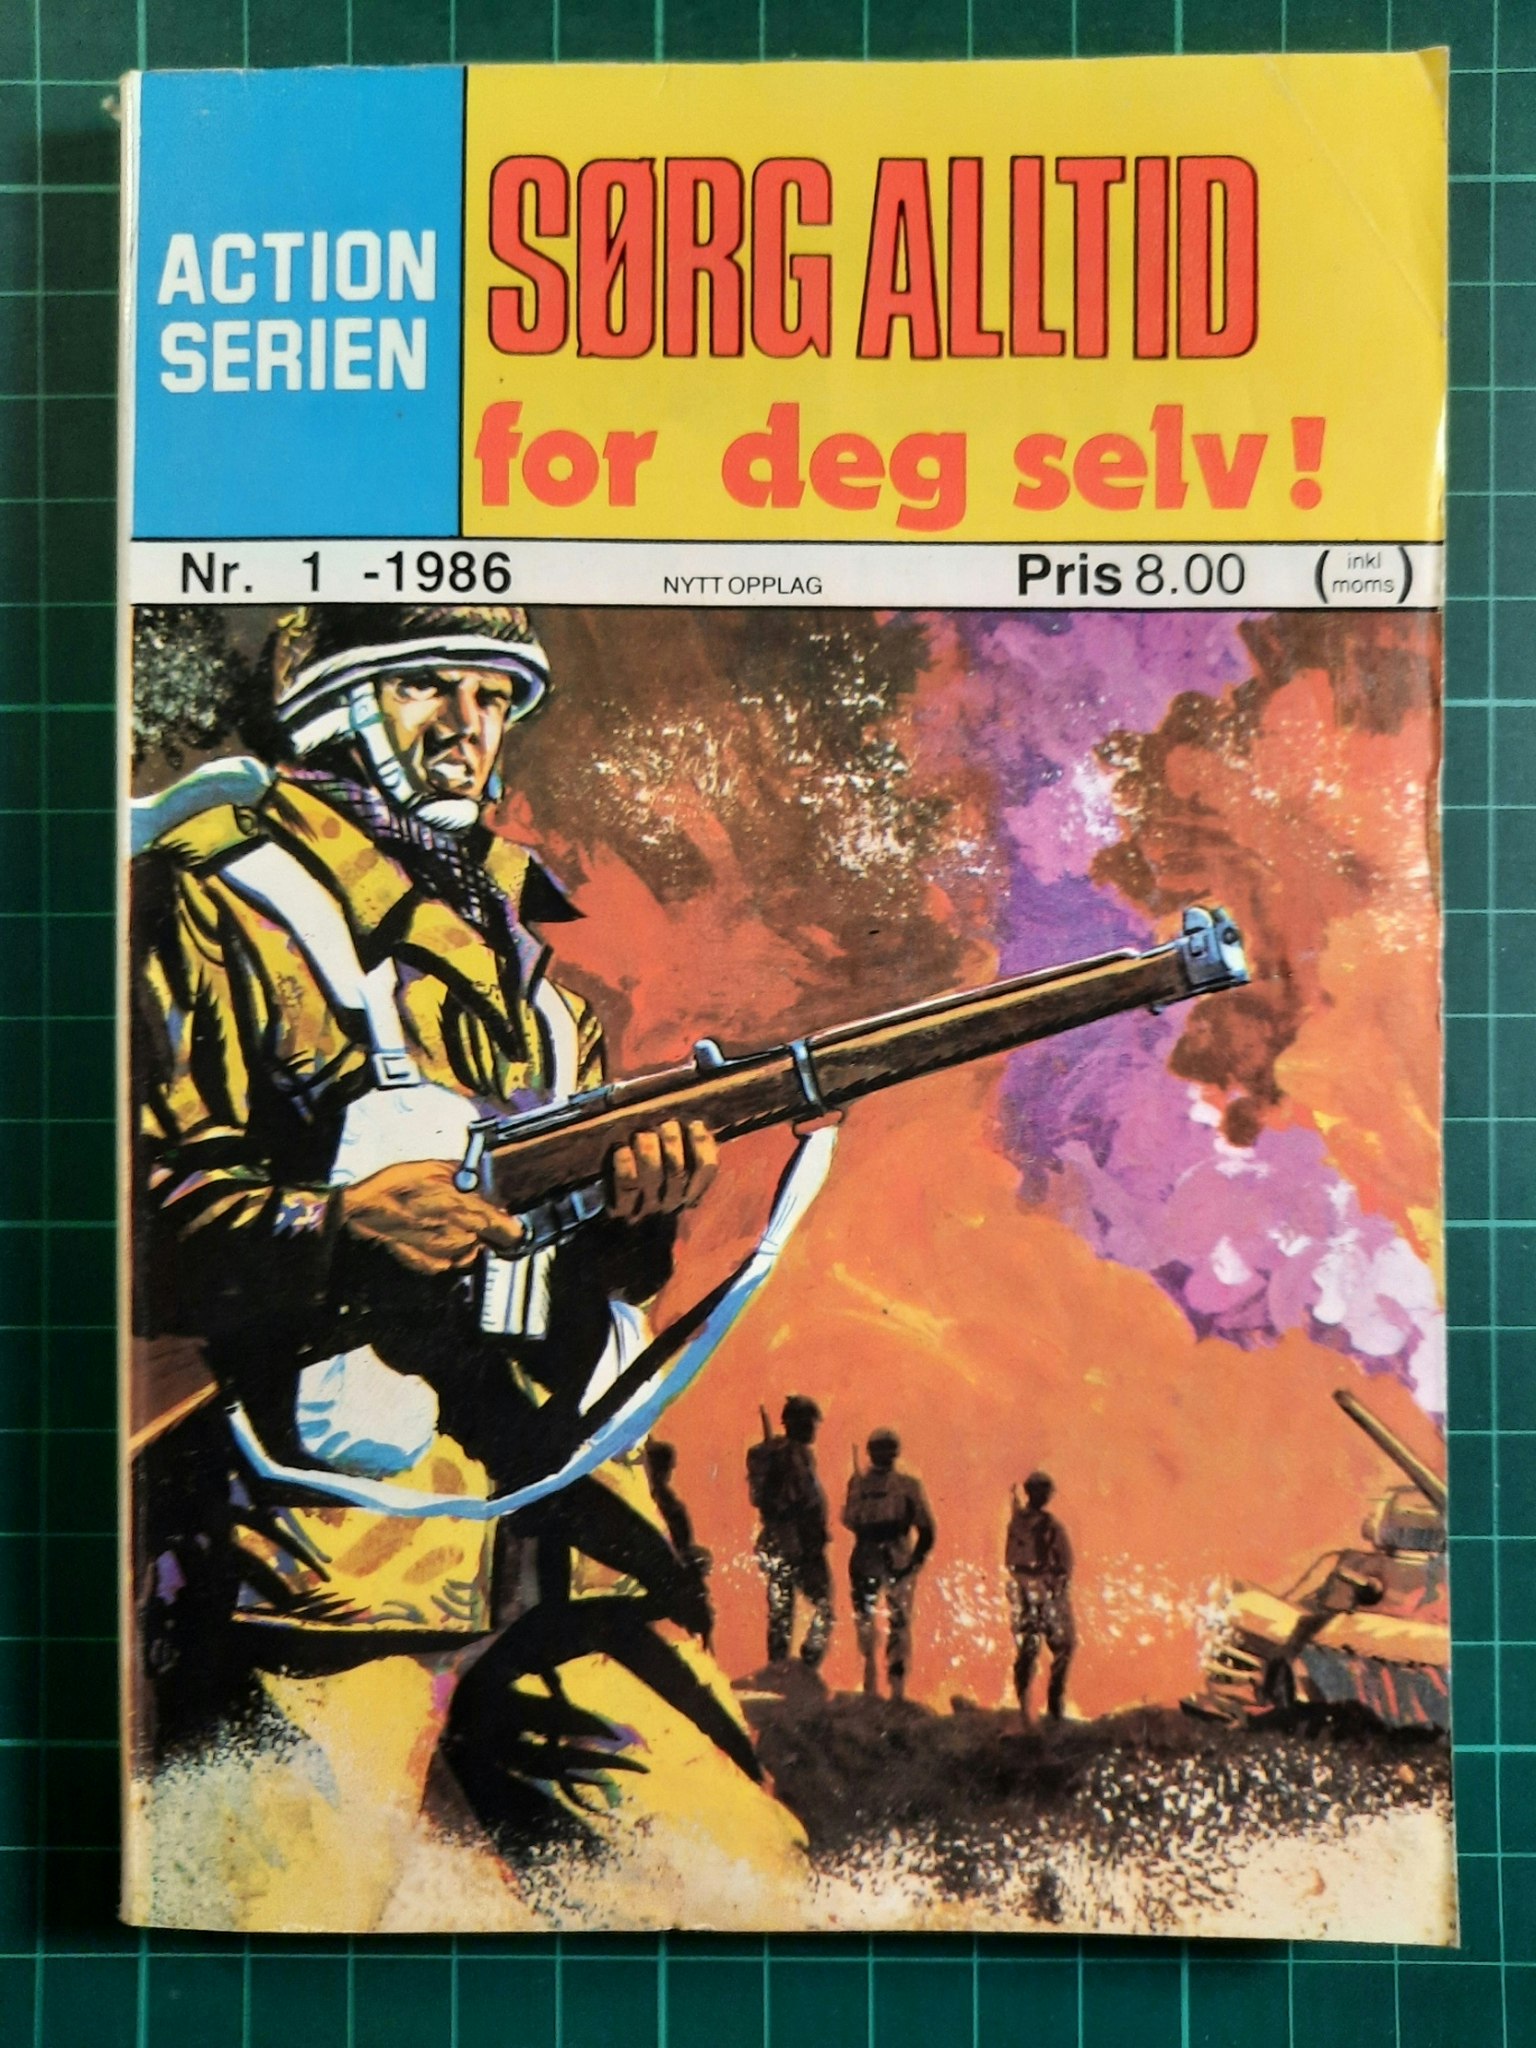 Action serien 1986 - 01